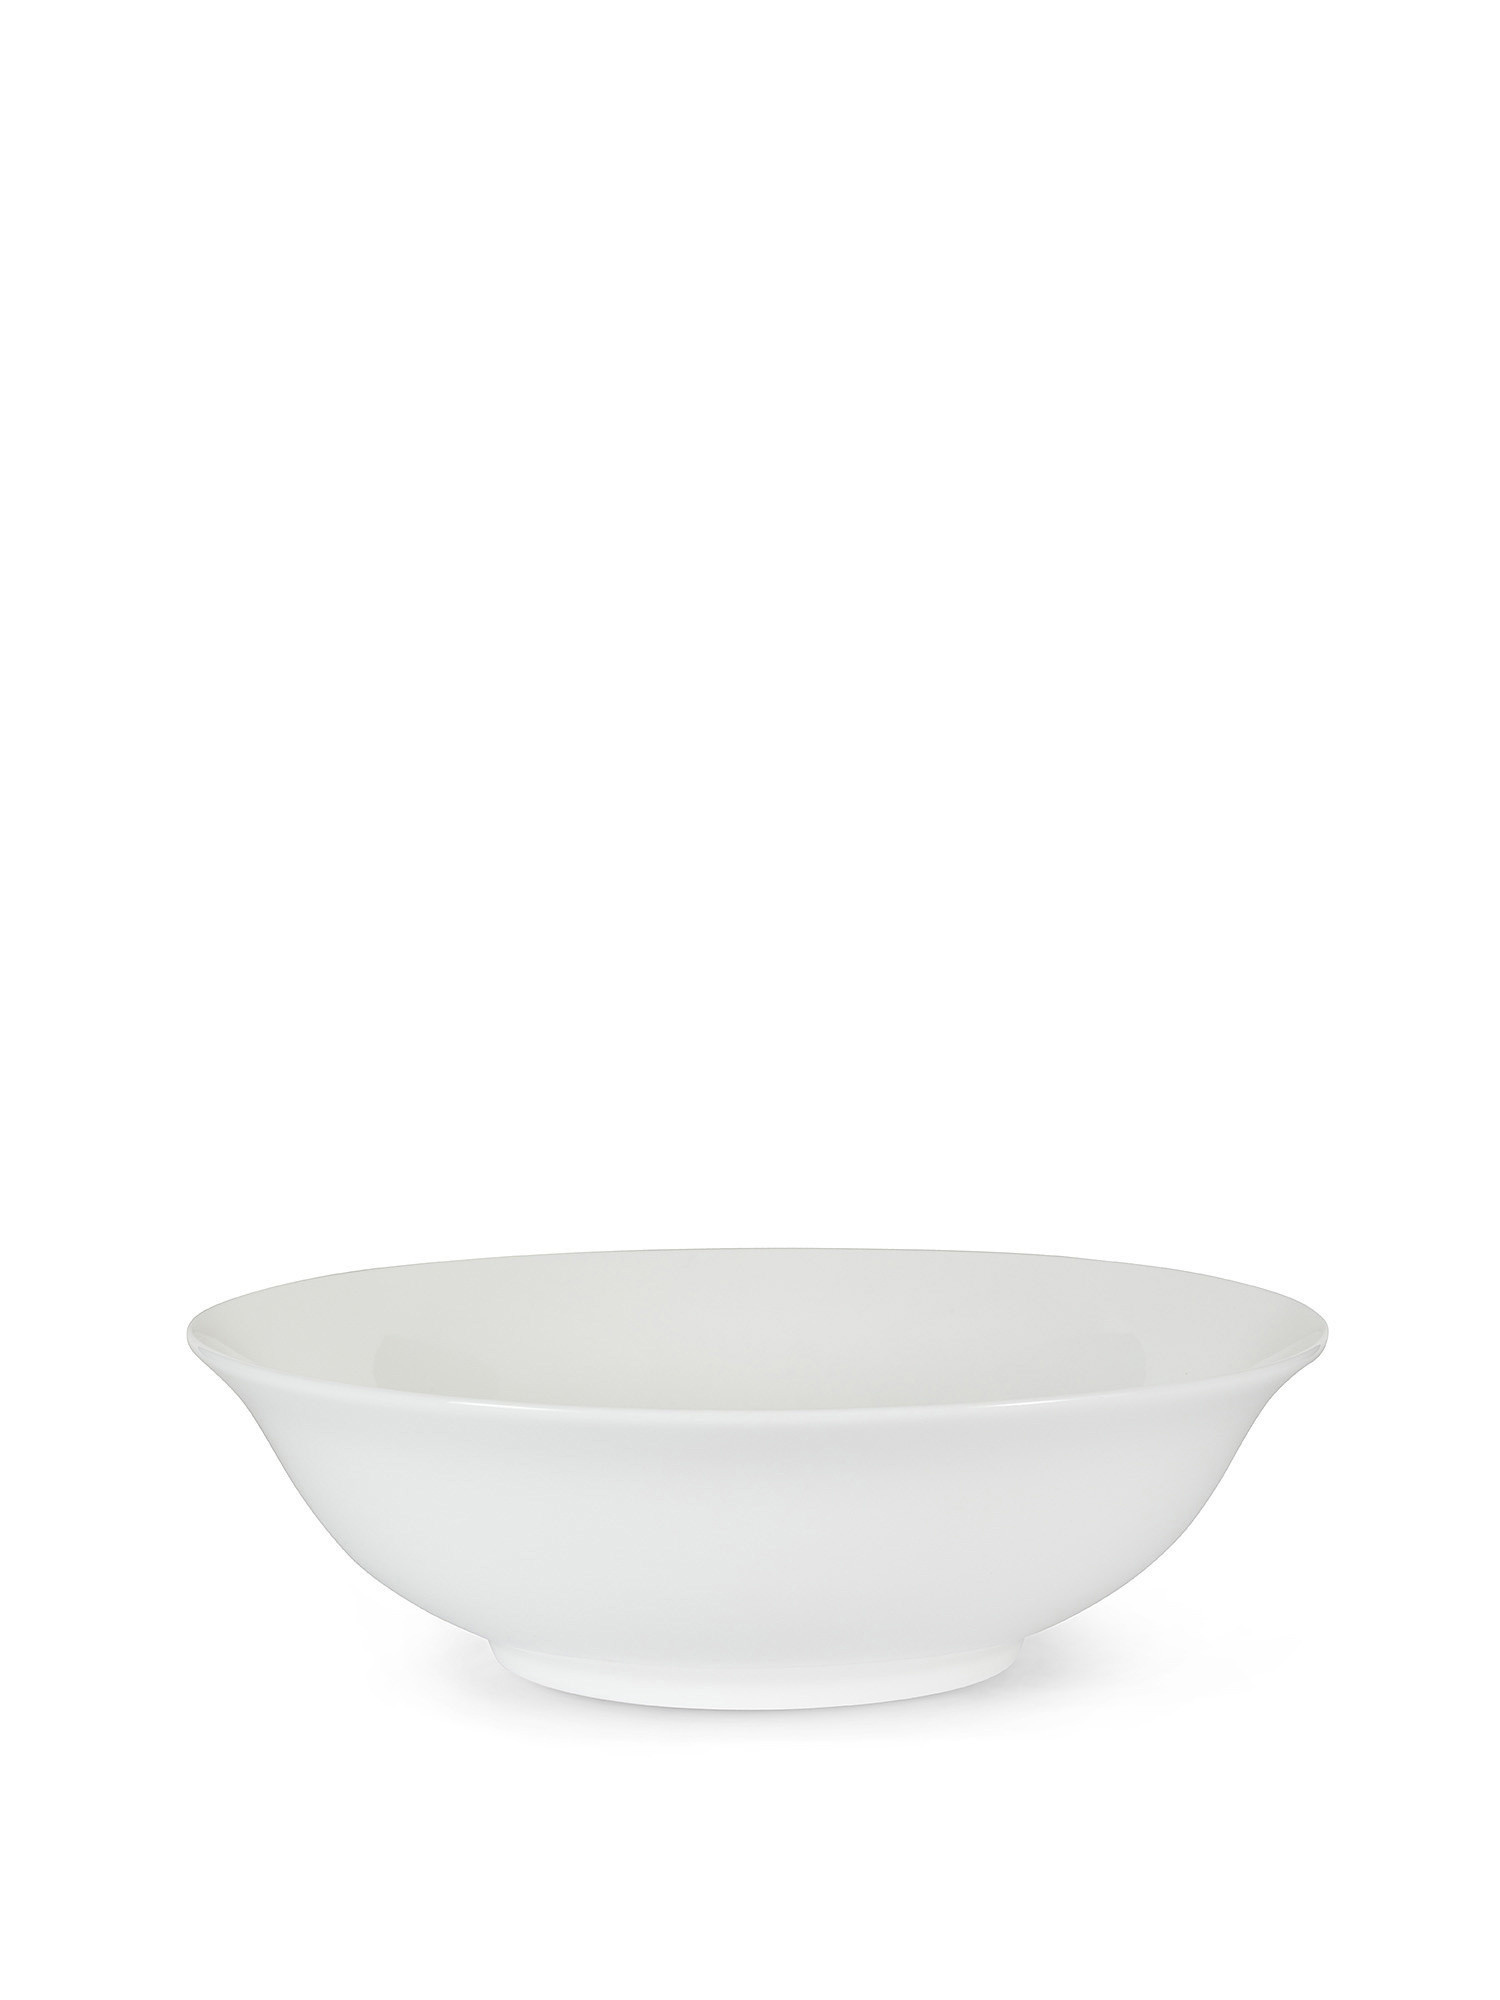 Viola new bone china salad bowl, White, large image number 0